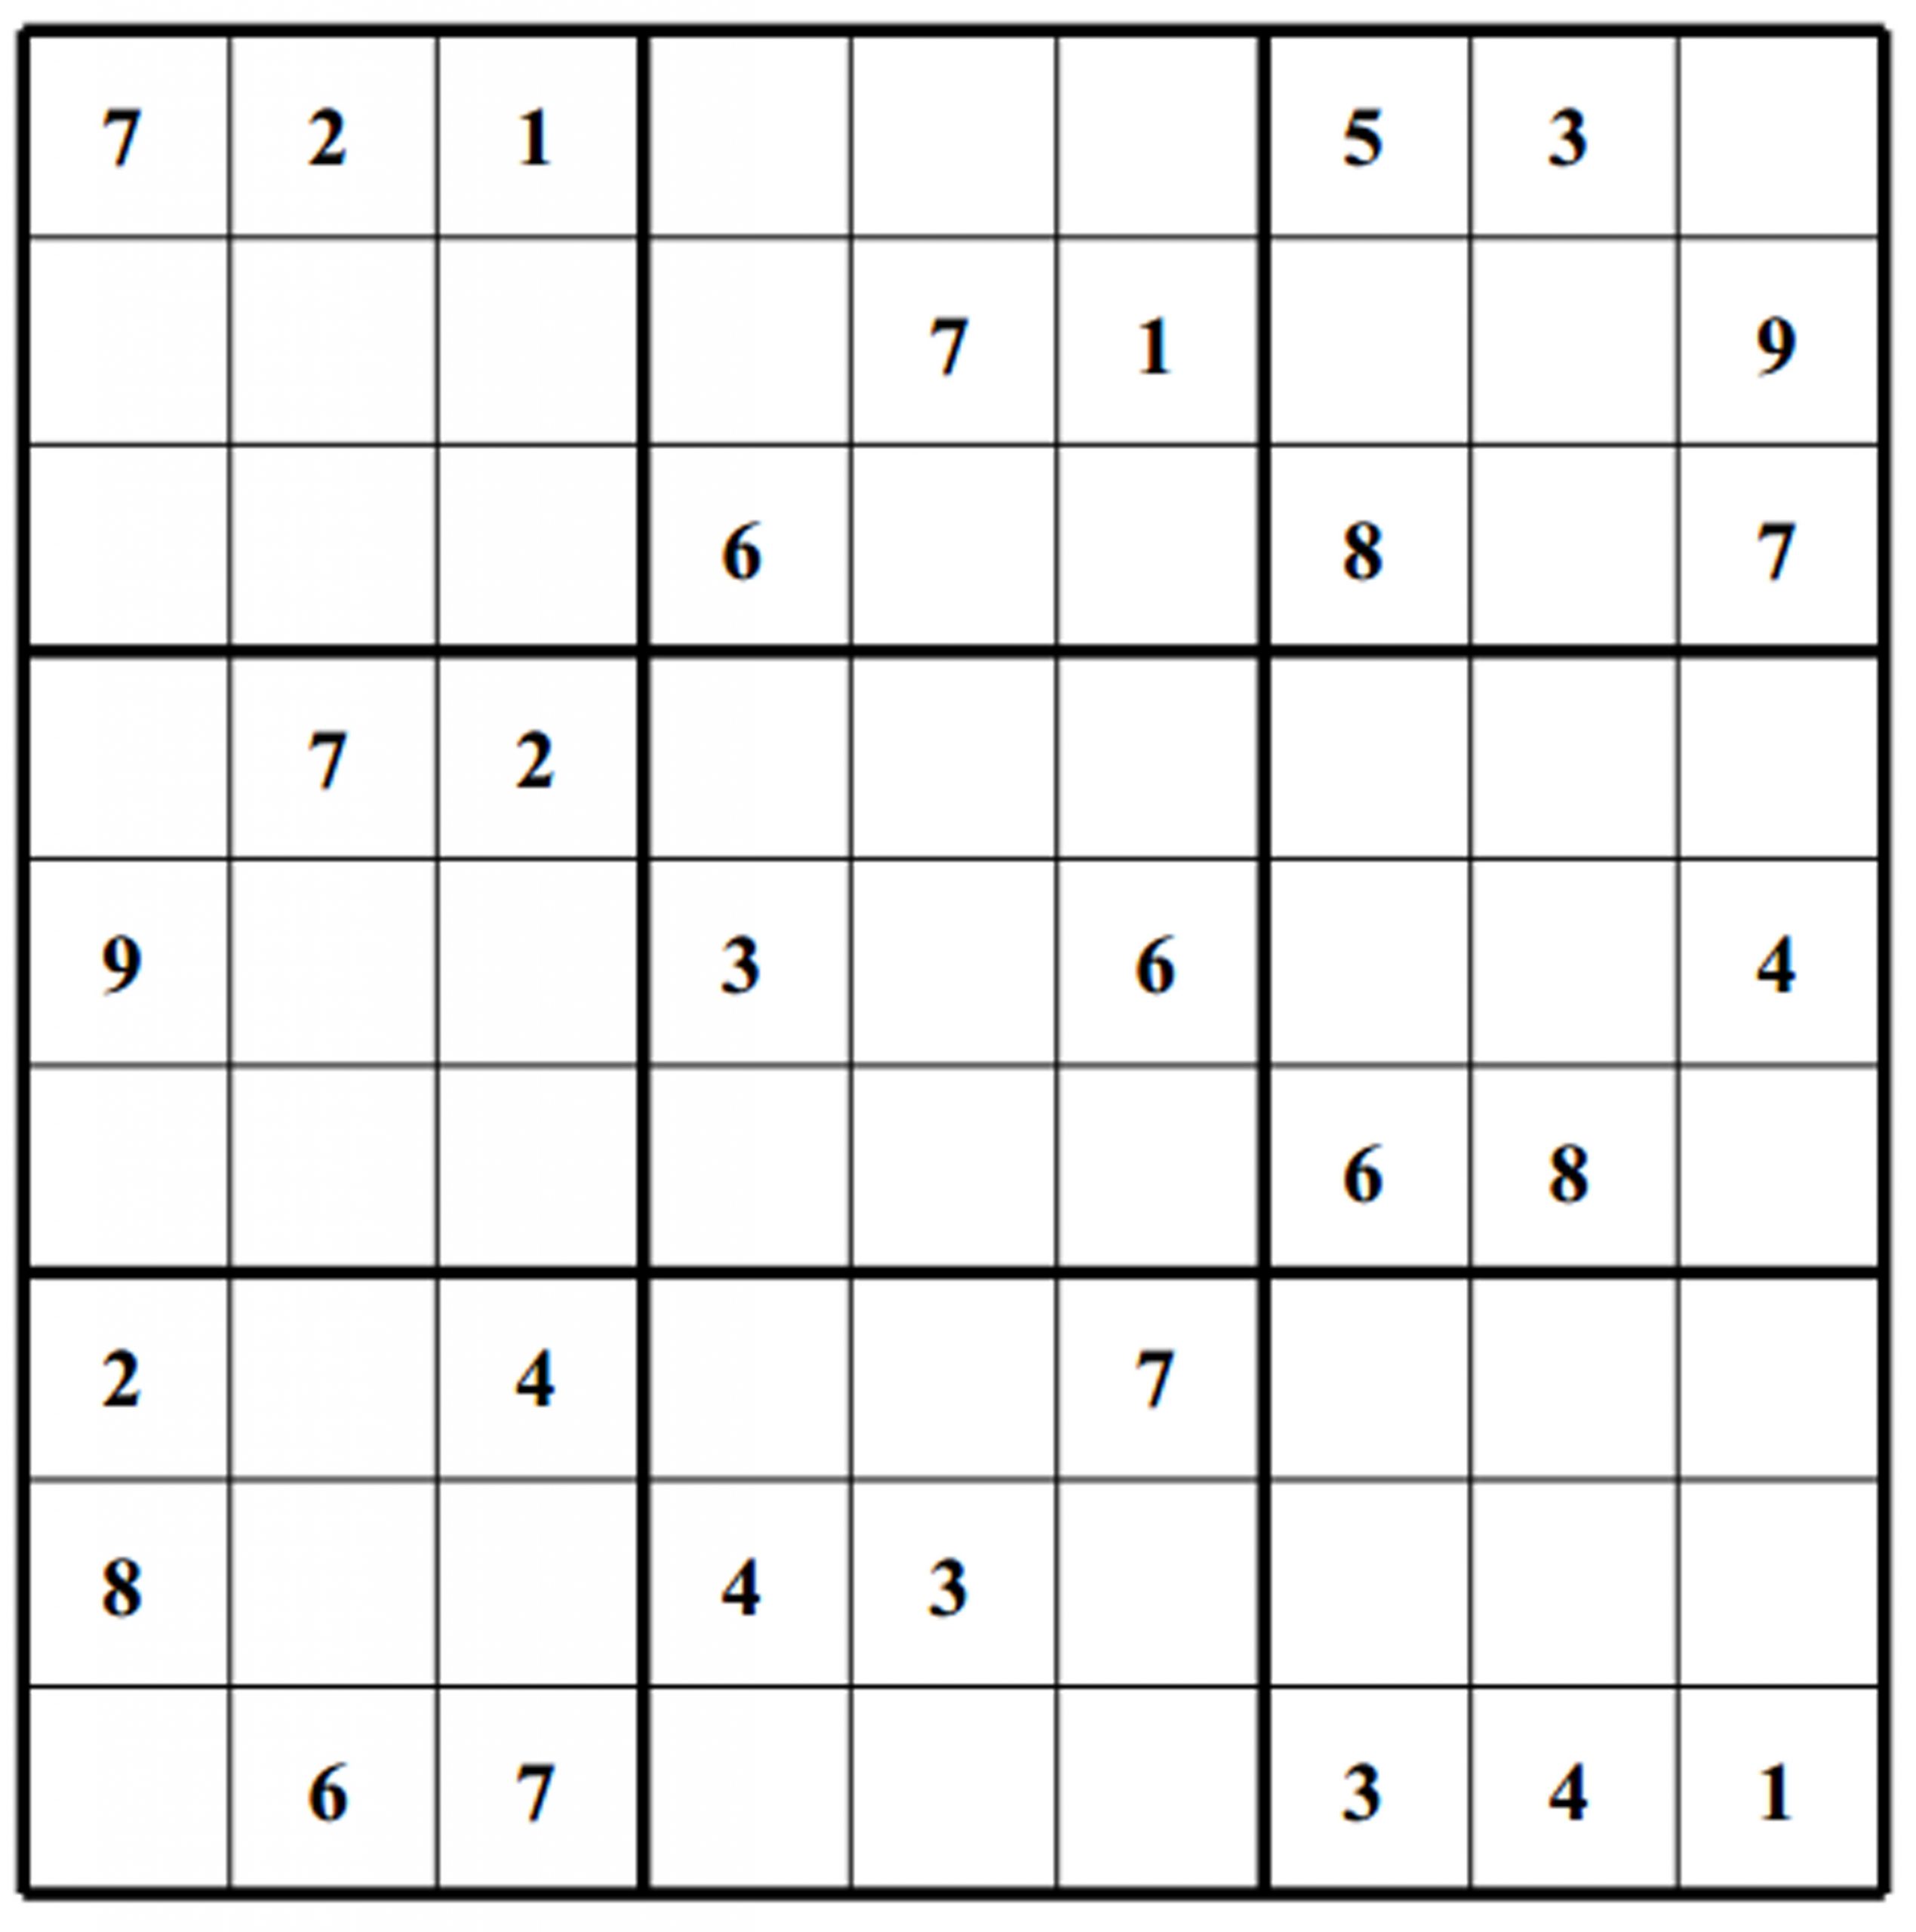 Free Sudoku Puzzles | Enjoy Daily Free Sudoku Puzzles From